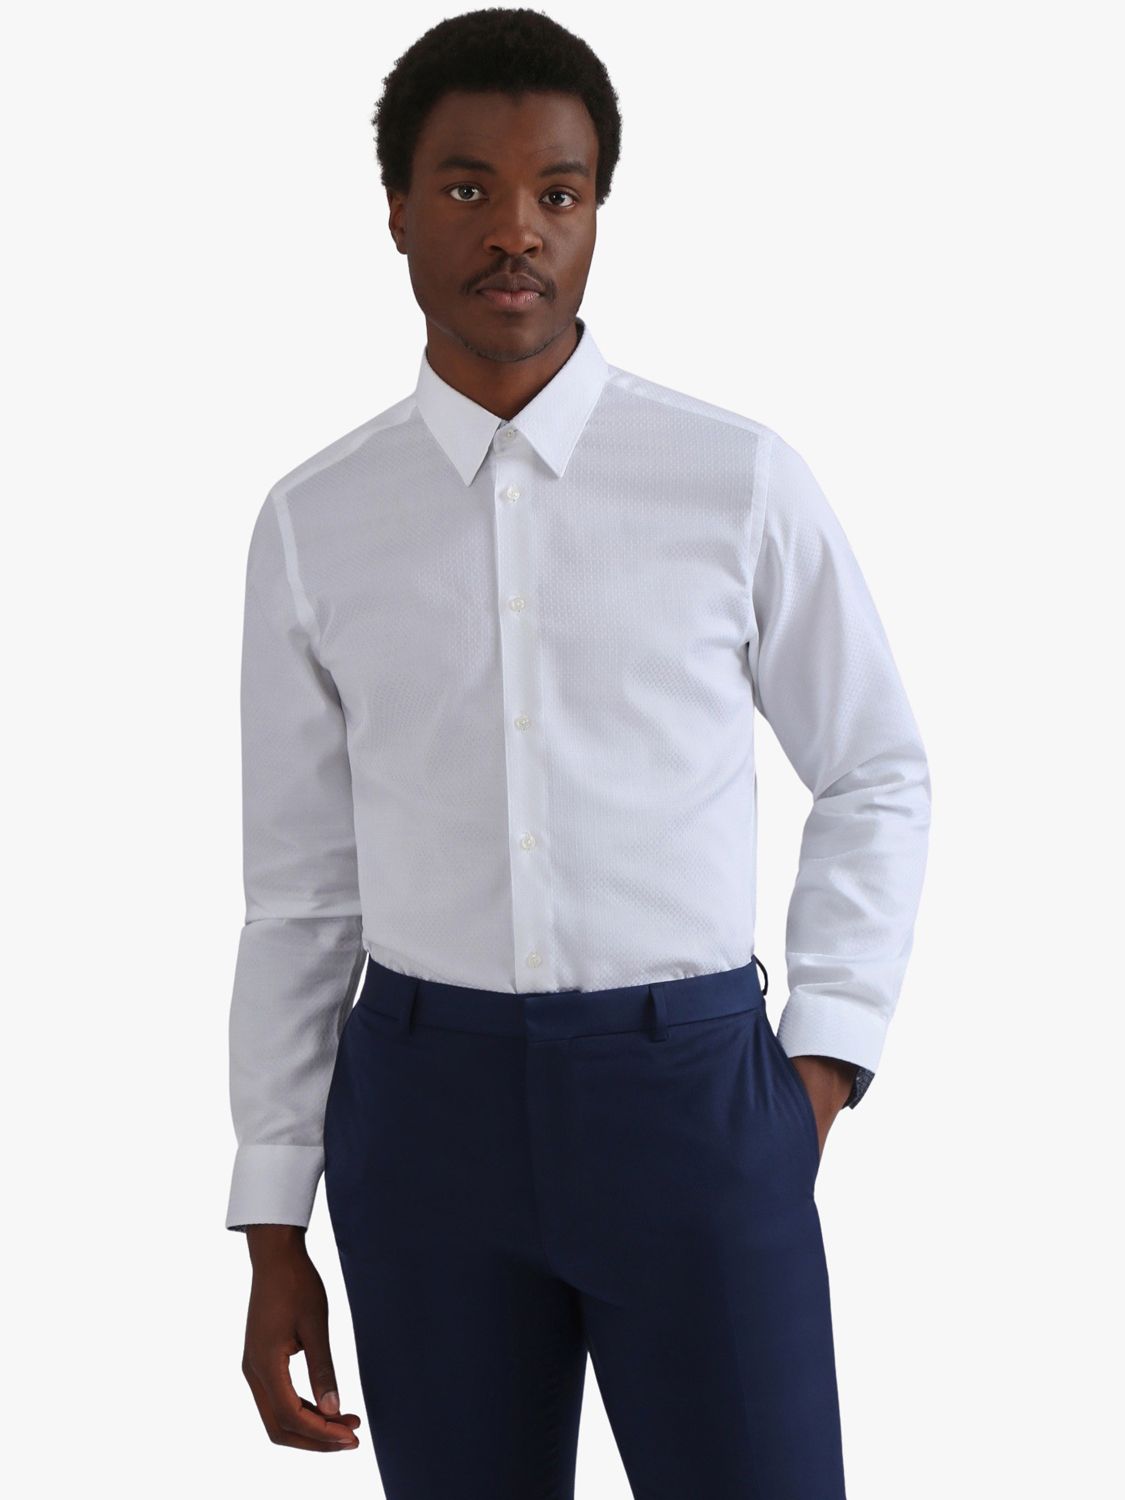 Ted Baker Makalu Jacquard Slim Fit Shirt, White, 17.5R